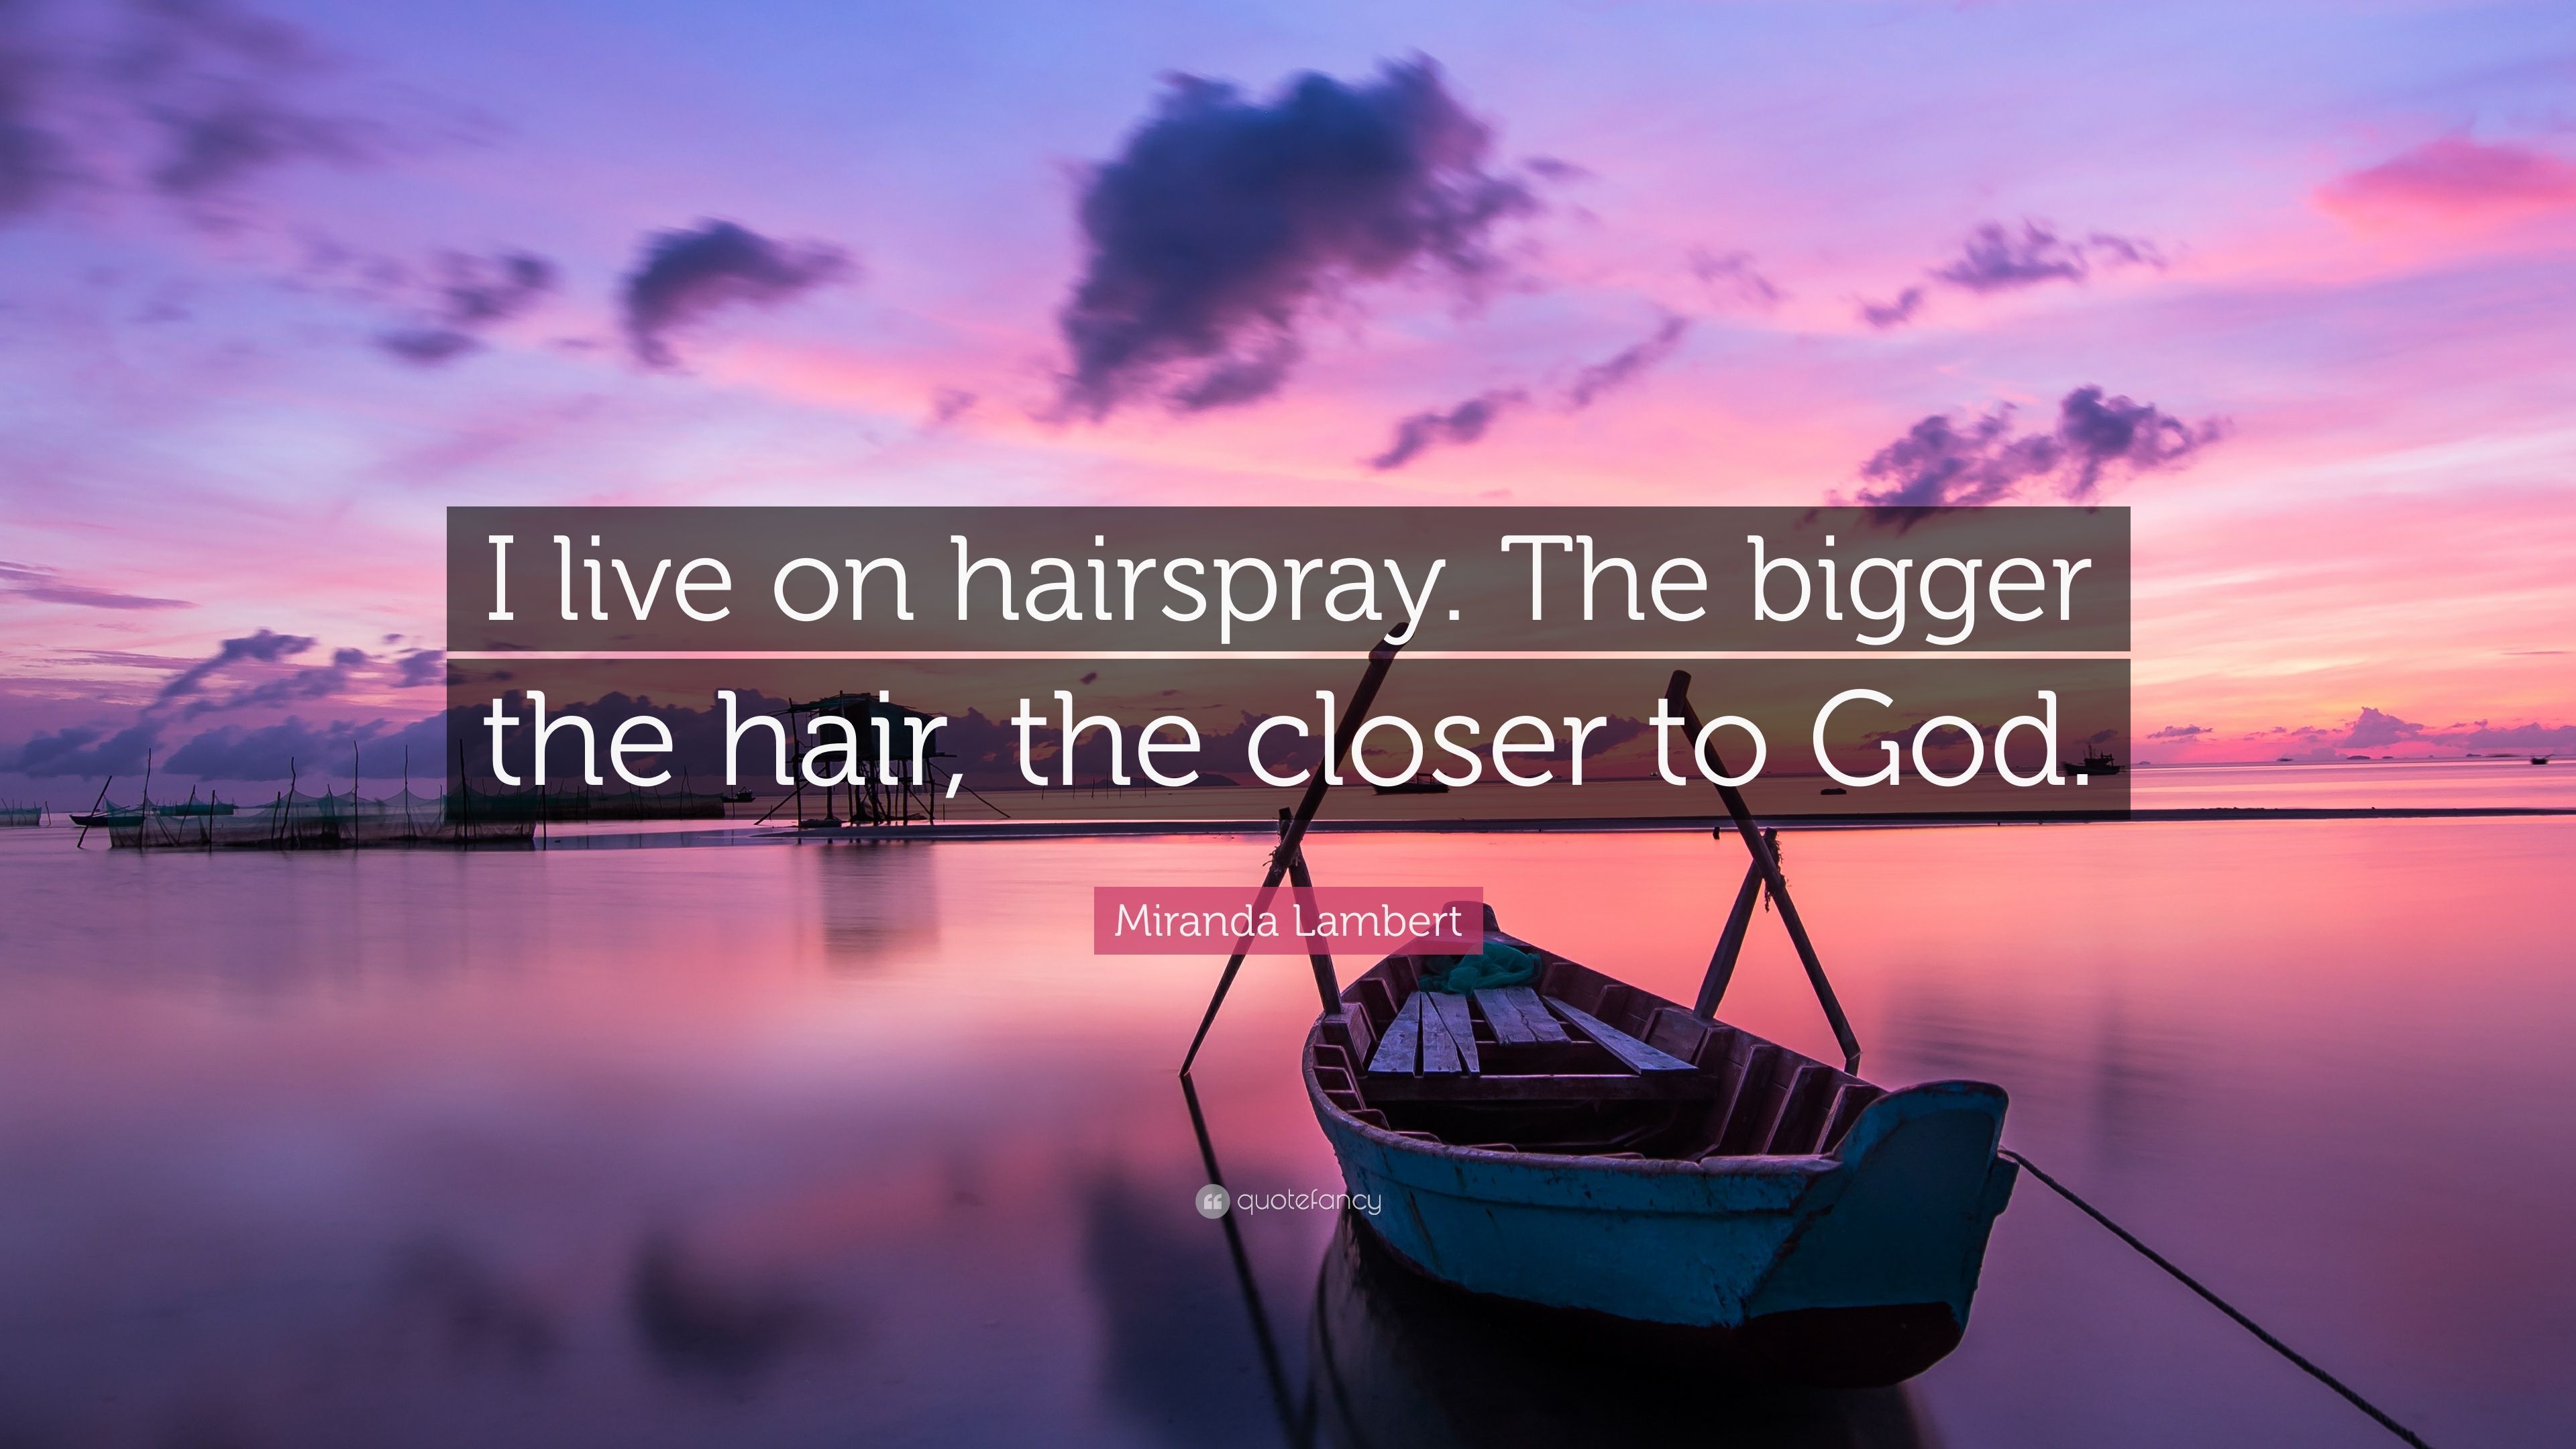 Miranda Lambert Quote: “I live on hairspray. The bigger the hair, the closer to God.” (7 wallpaper)